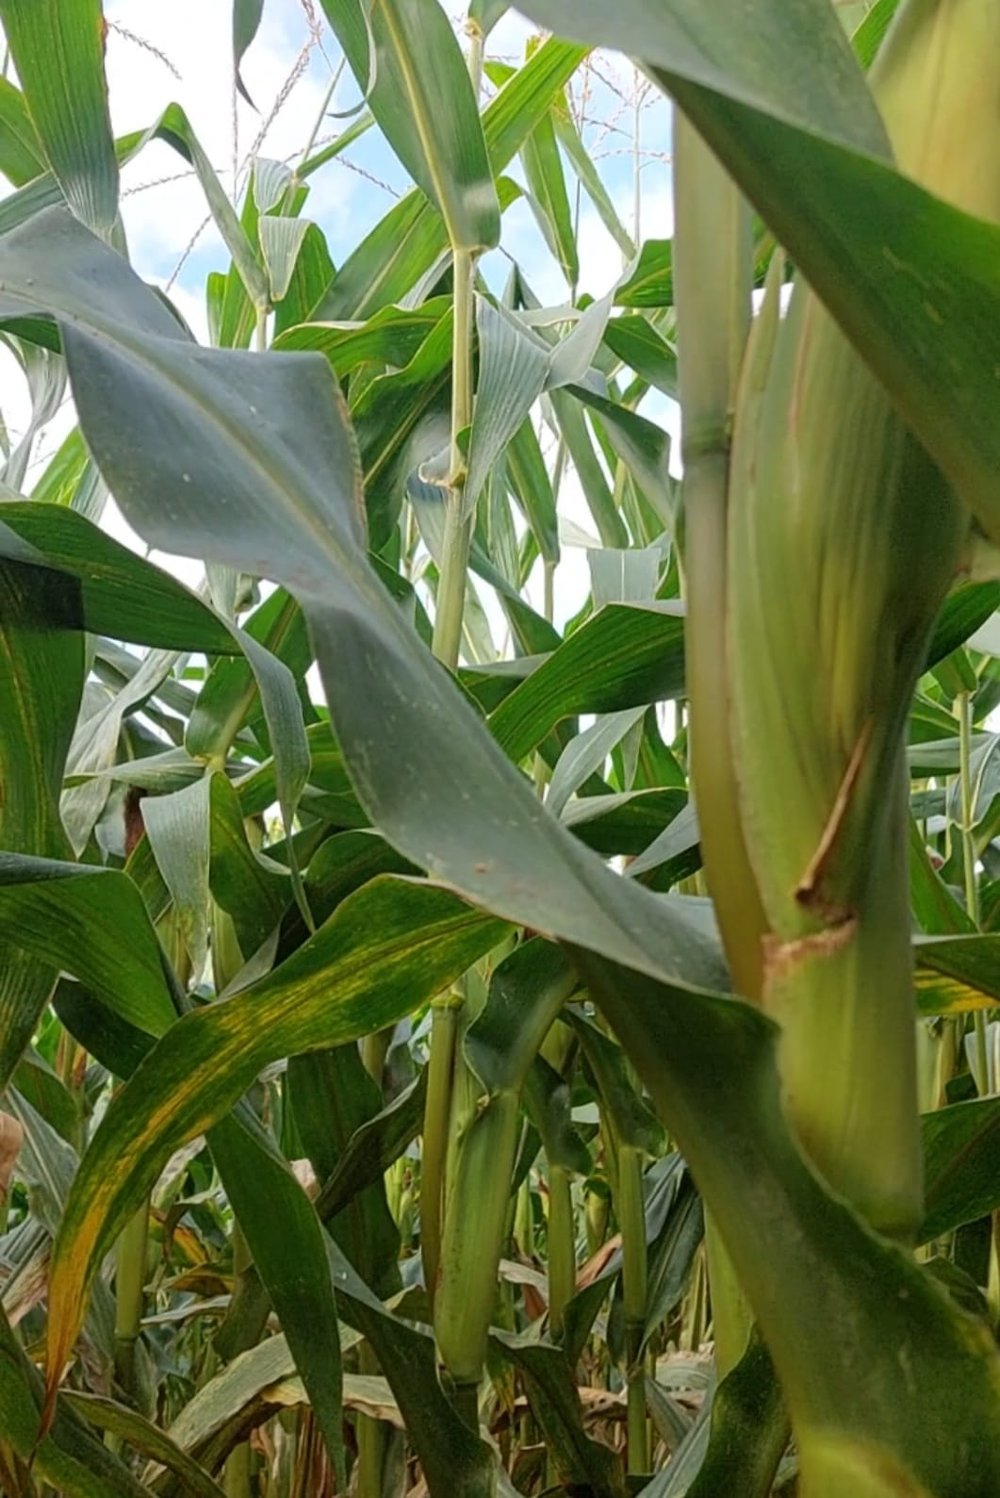 Figure (6): Maize4, good maize, ground photo, 27th August 2022